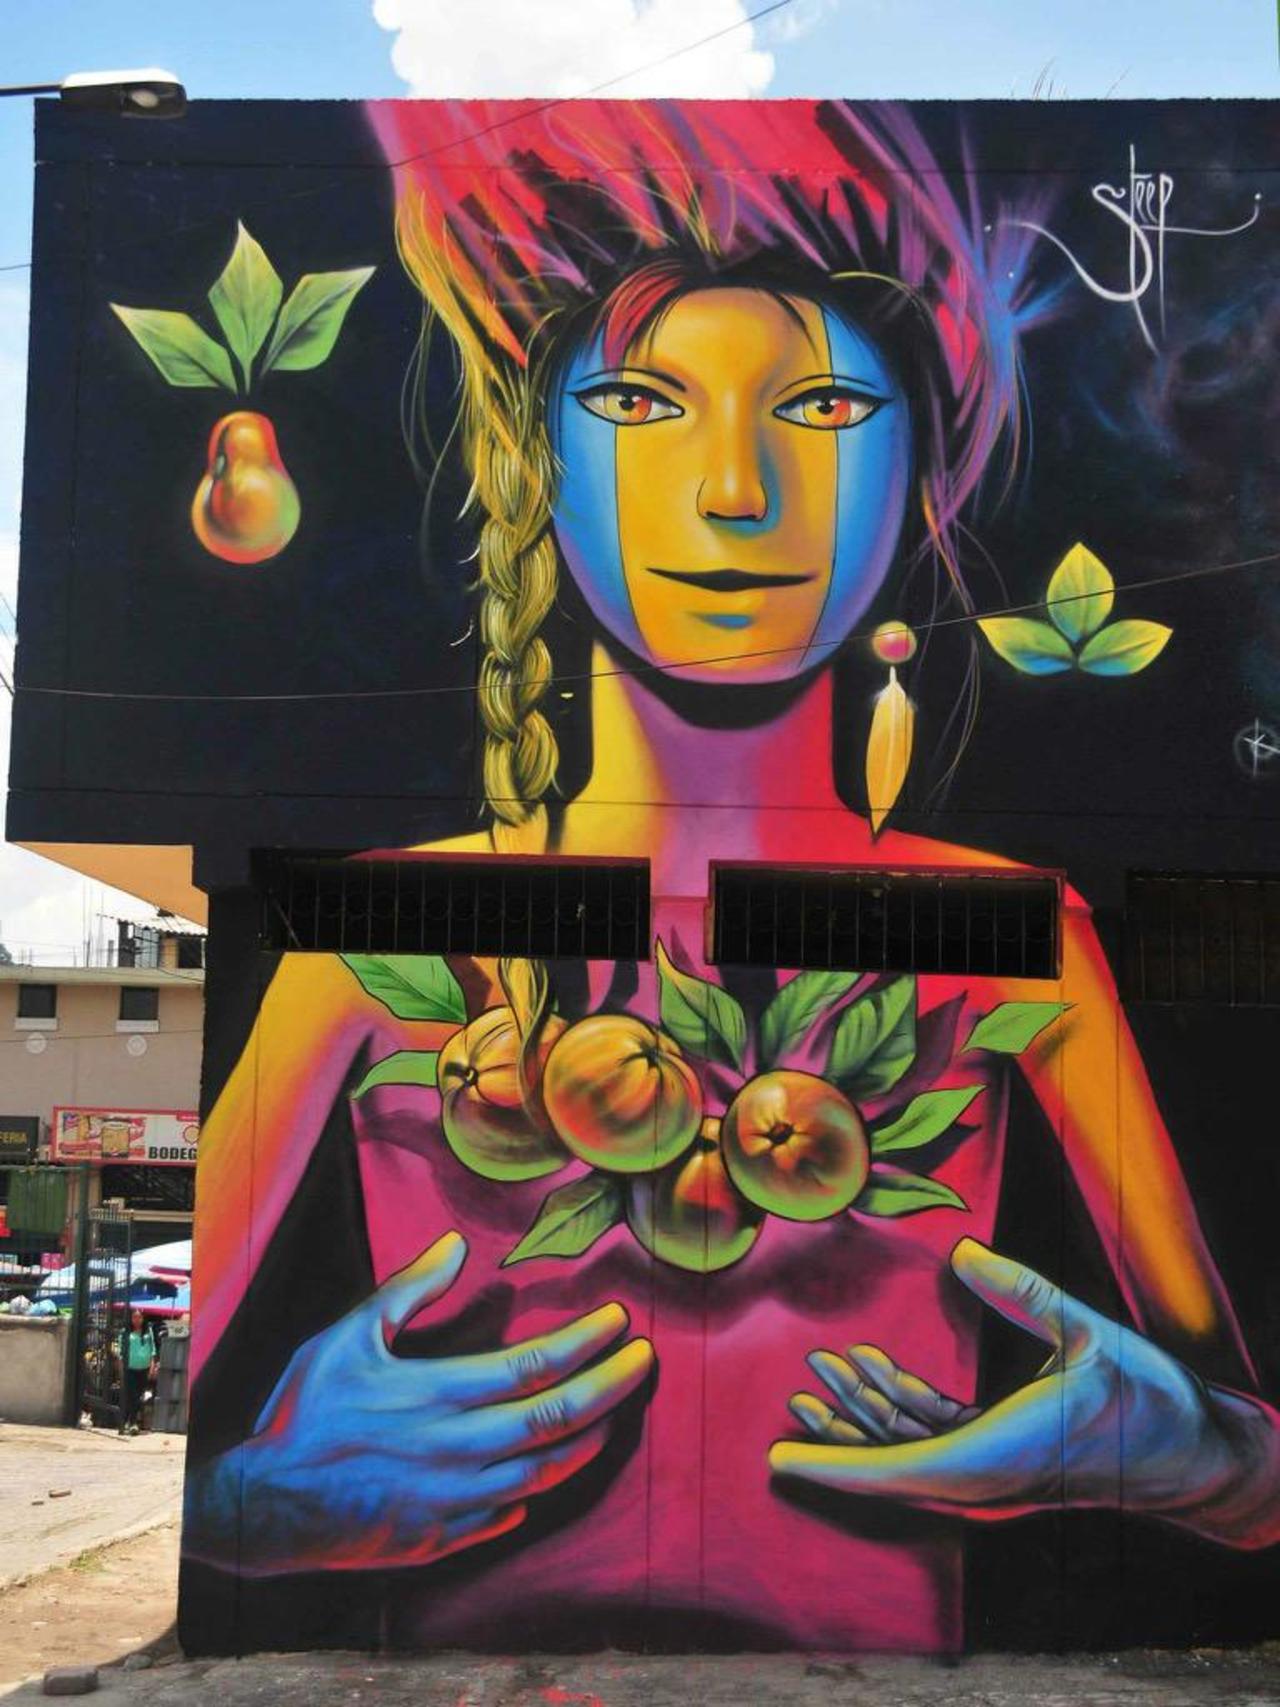 Nice! Street Art by Steep

#art #graffiti #mural #streetart http://t.co/9pQKcAsjYS MT @GoogleStreetArt